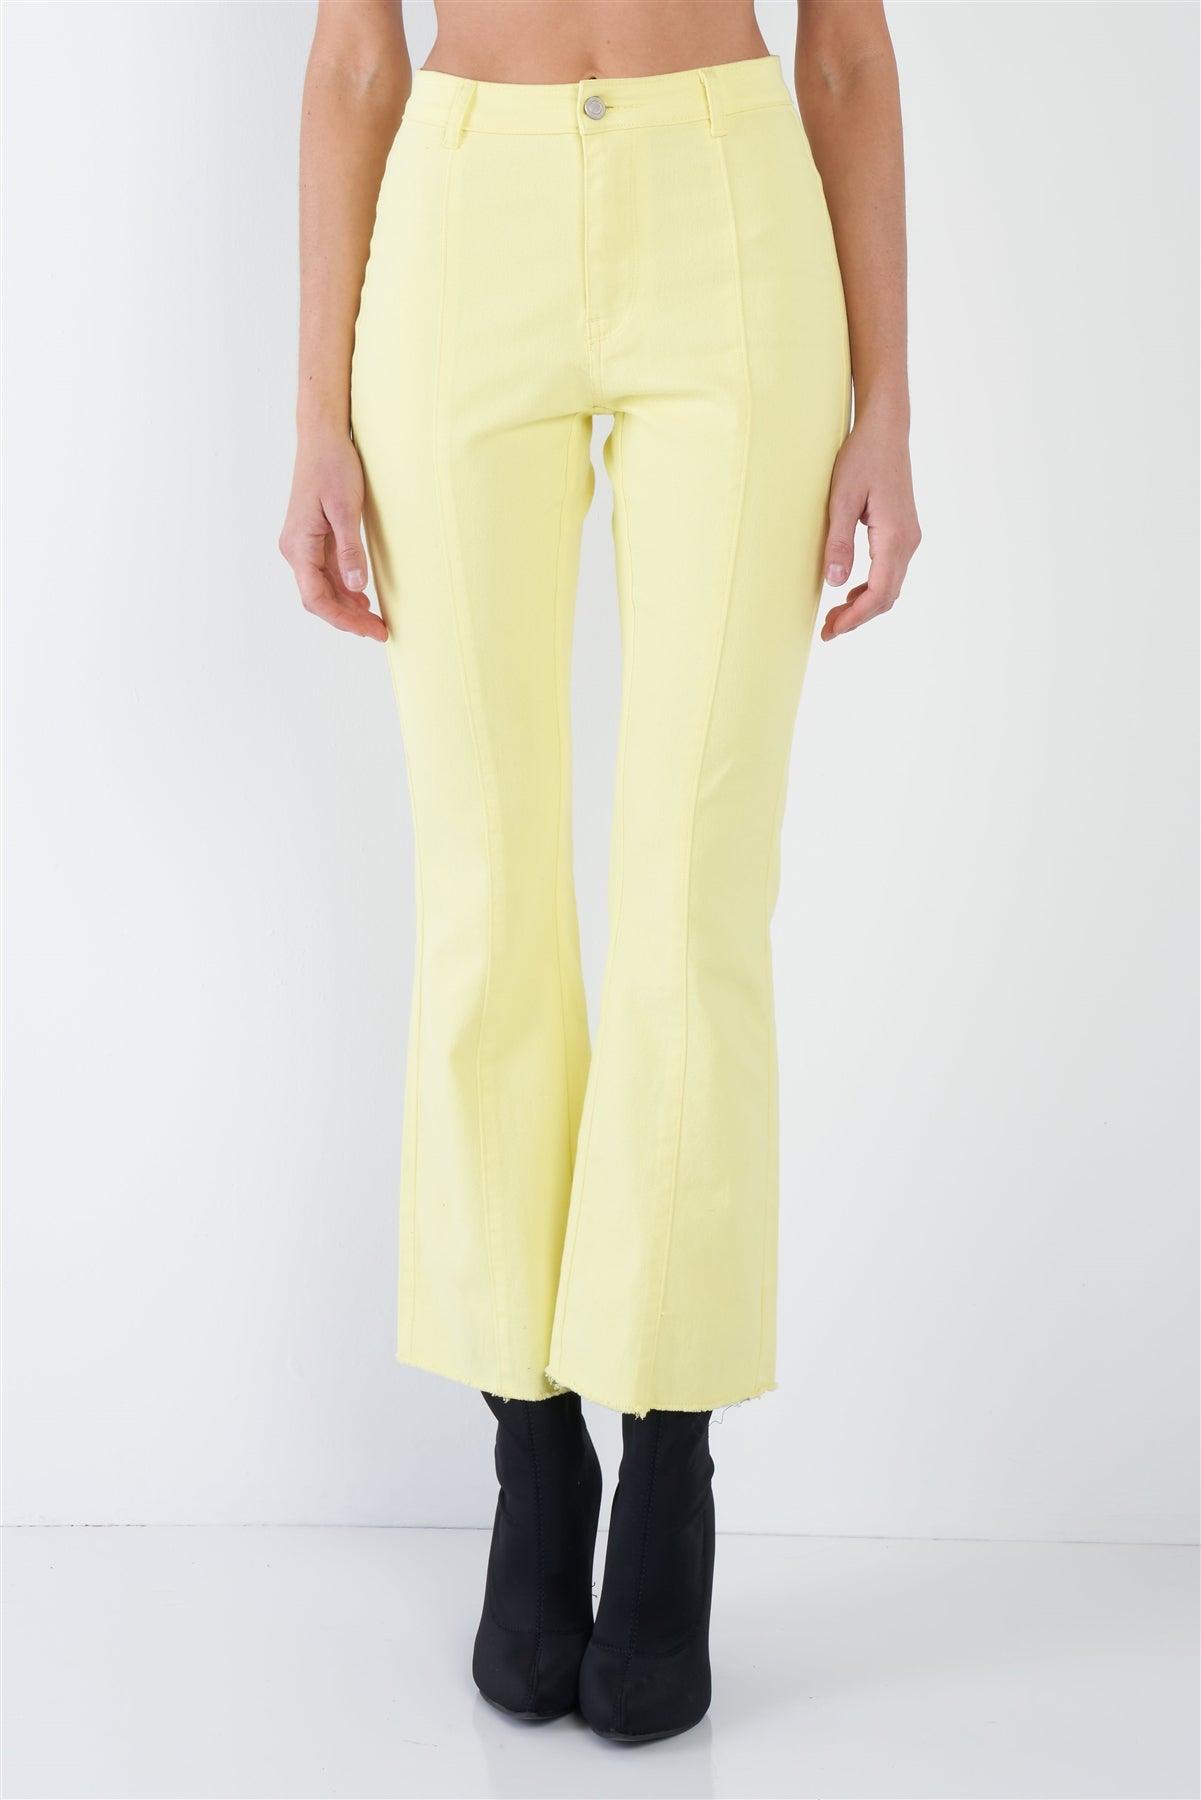 Yellow Denim Cotton Casual Front Pleat Jeans   /4-2-1